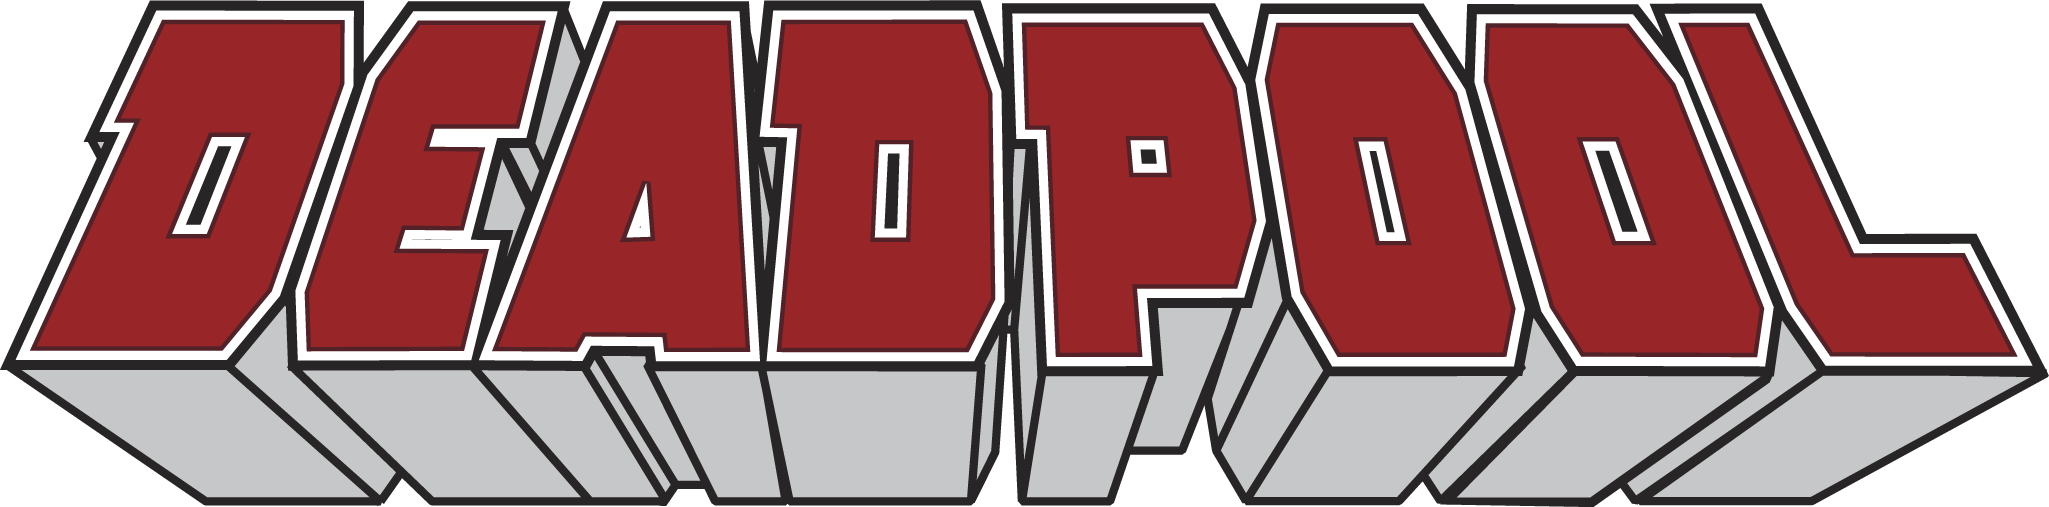 Deadpool الرسمي Logo PNG صورة خلفية